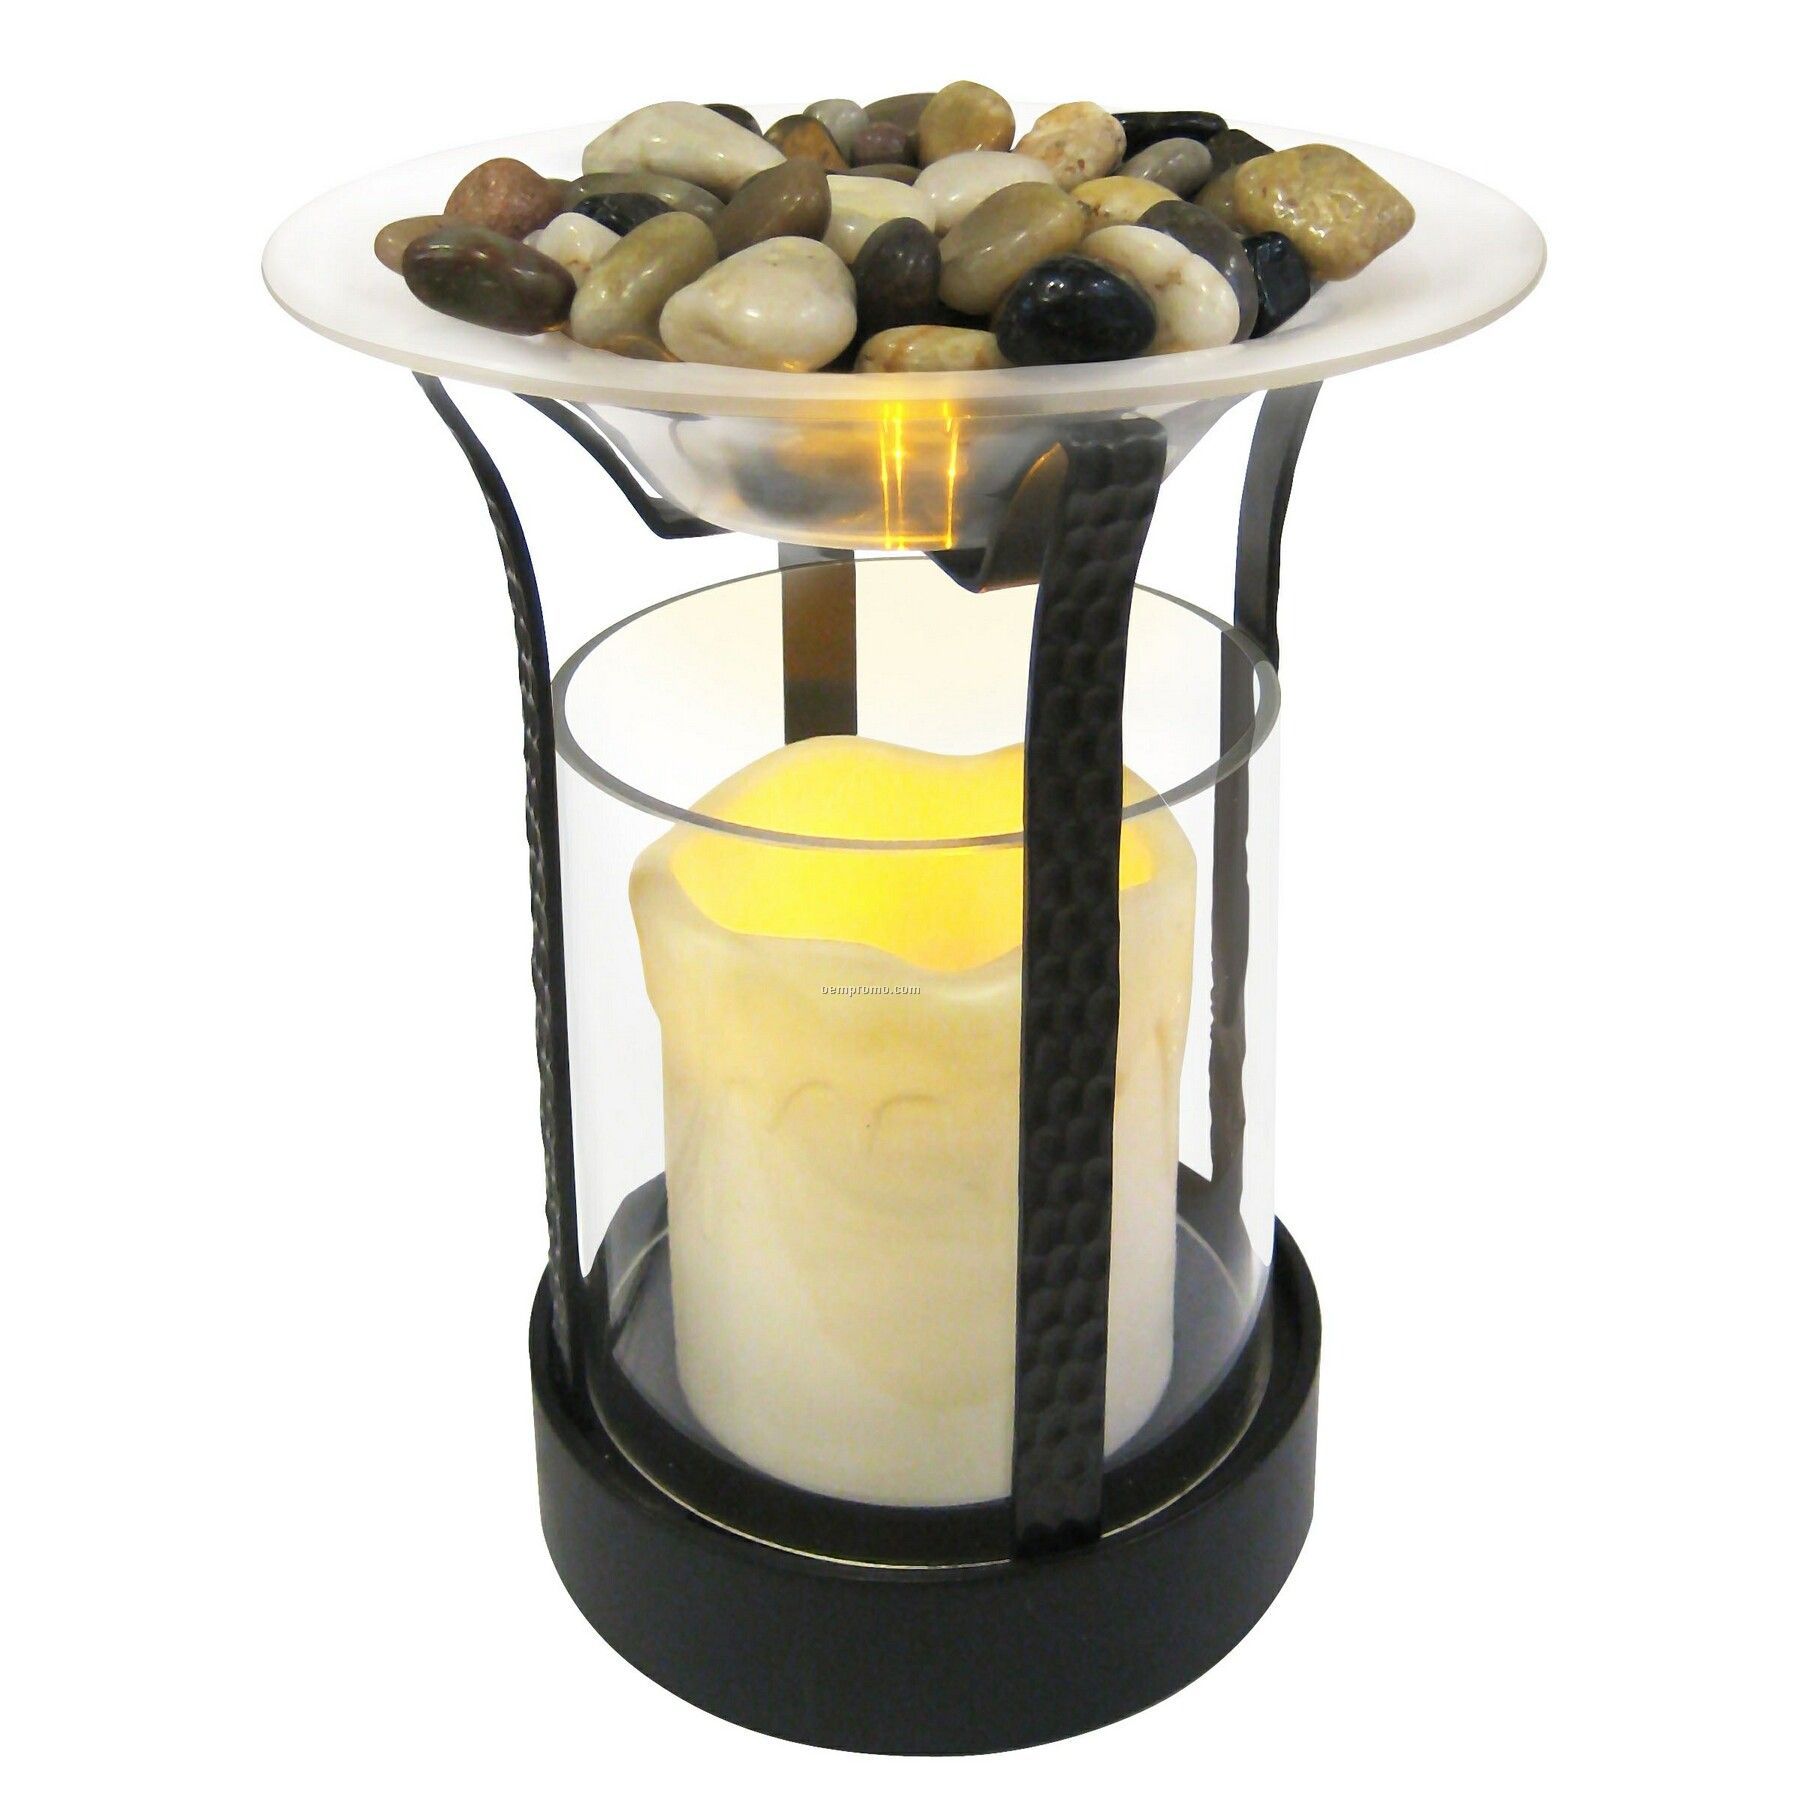 Homedics Aromaspa Flameless Candle/ Aroma Oil Diffuser